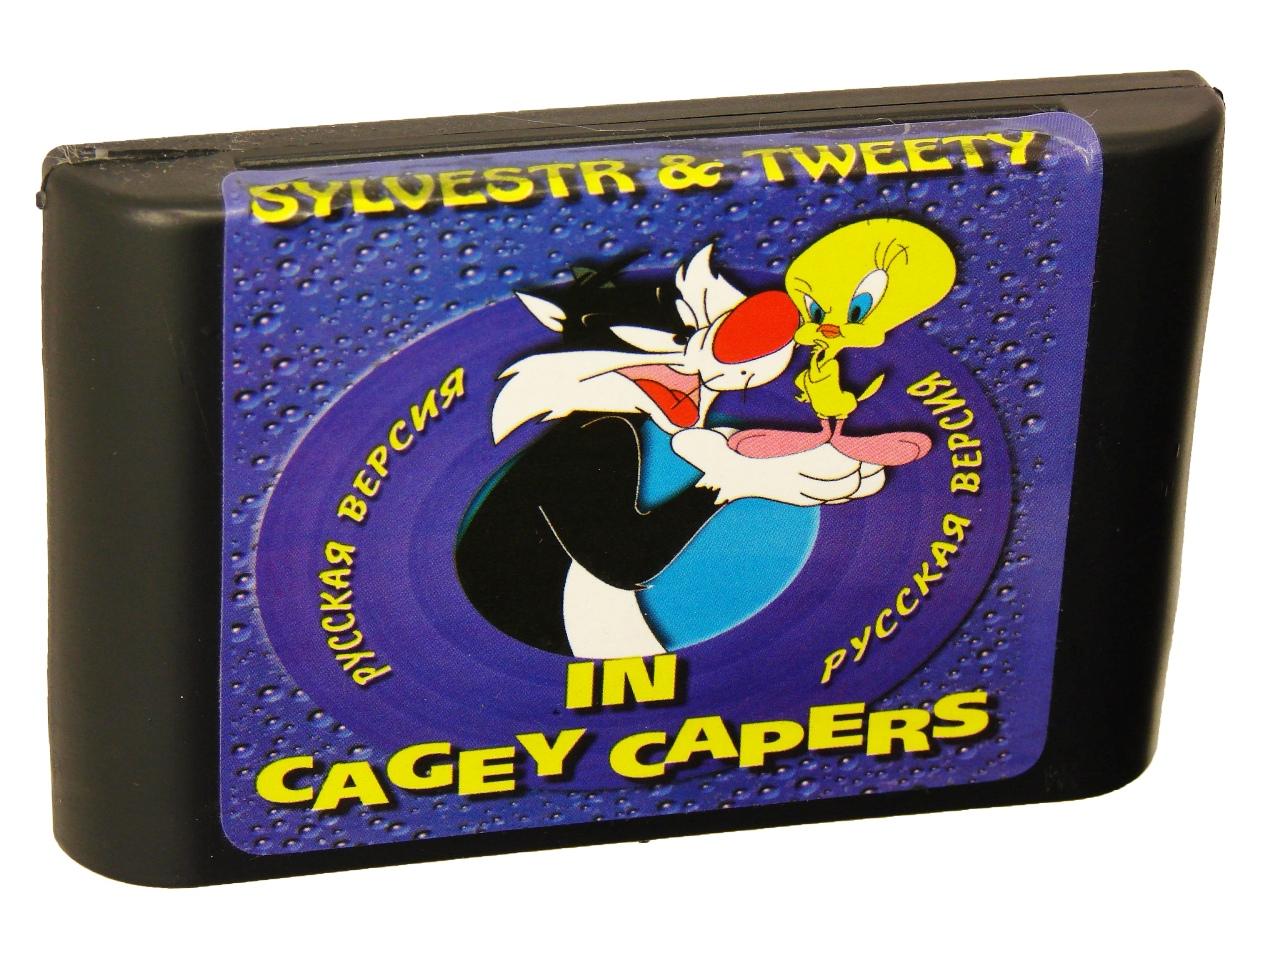 Картридж для Sega Sylvestr & Tweety in cagey capers (Sega)